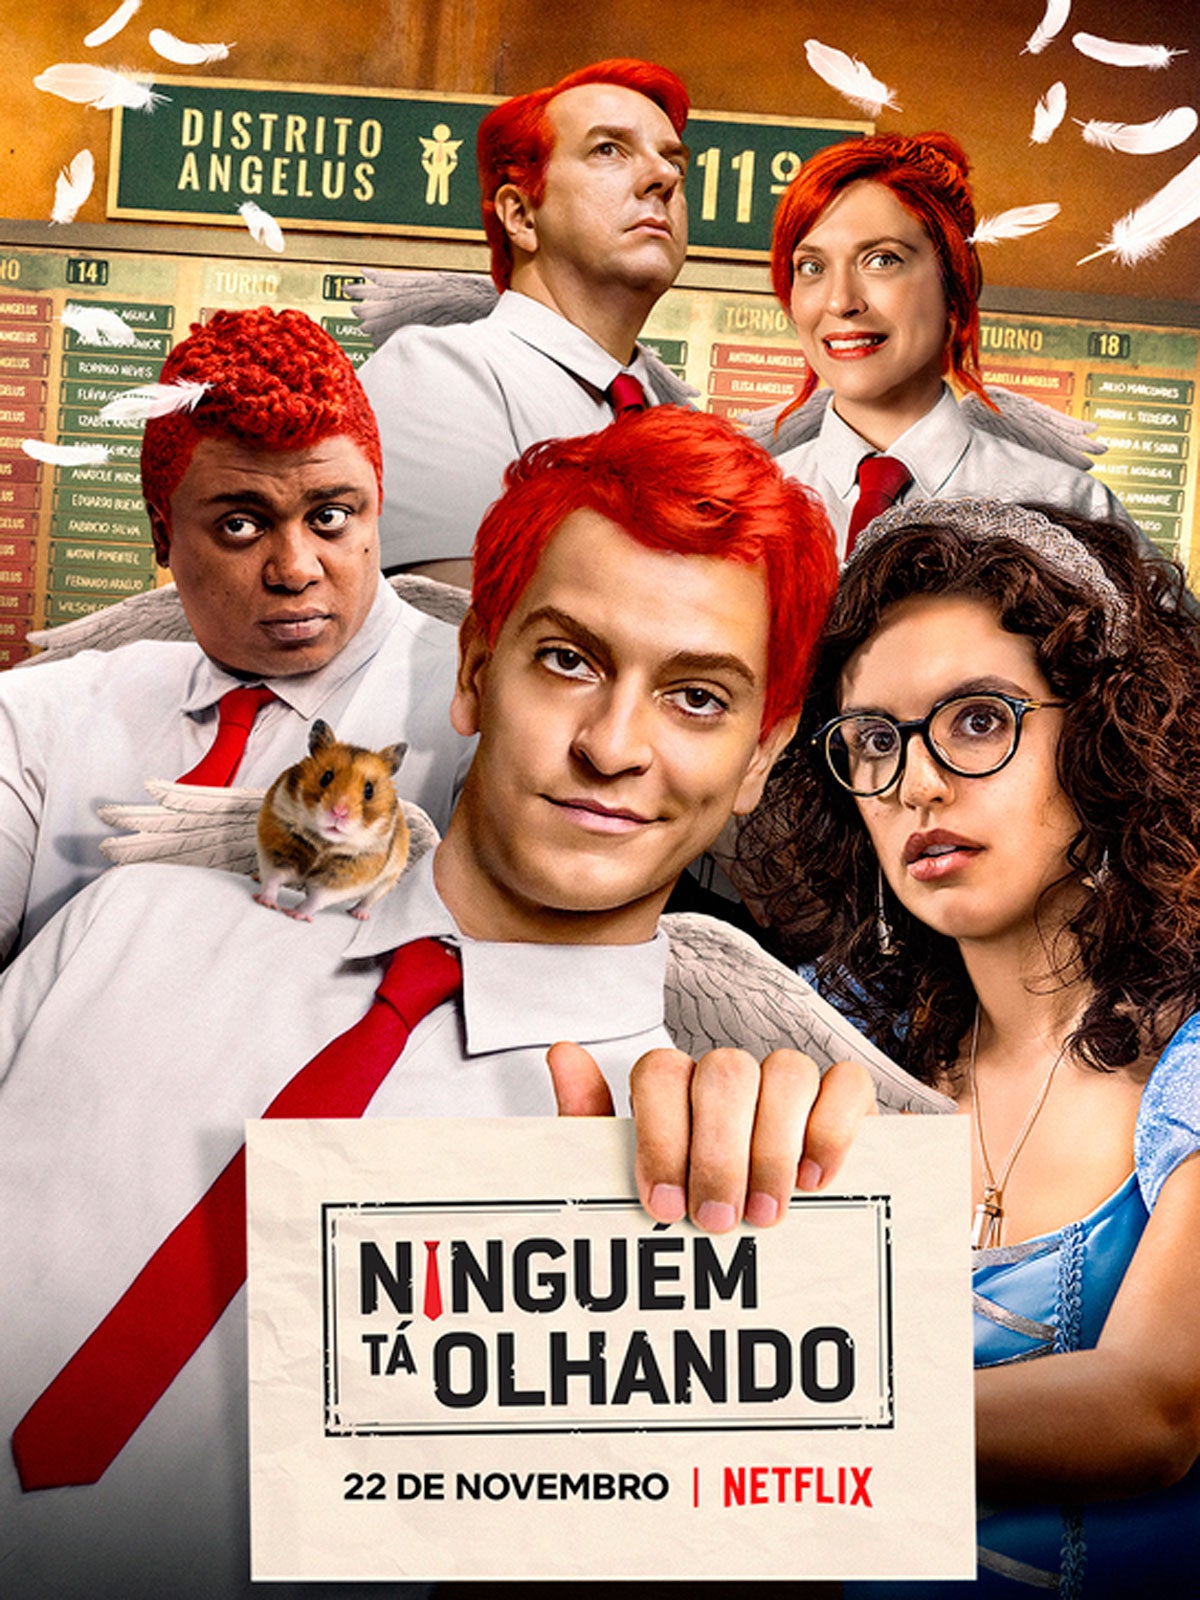 TV ratings for Ninguém Tá Olhando in Argentina. Netflix TV series